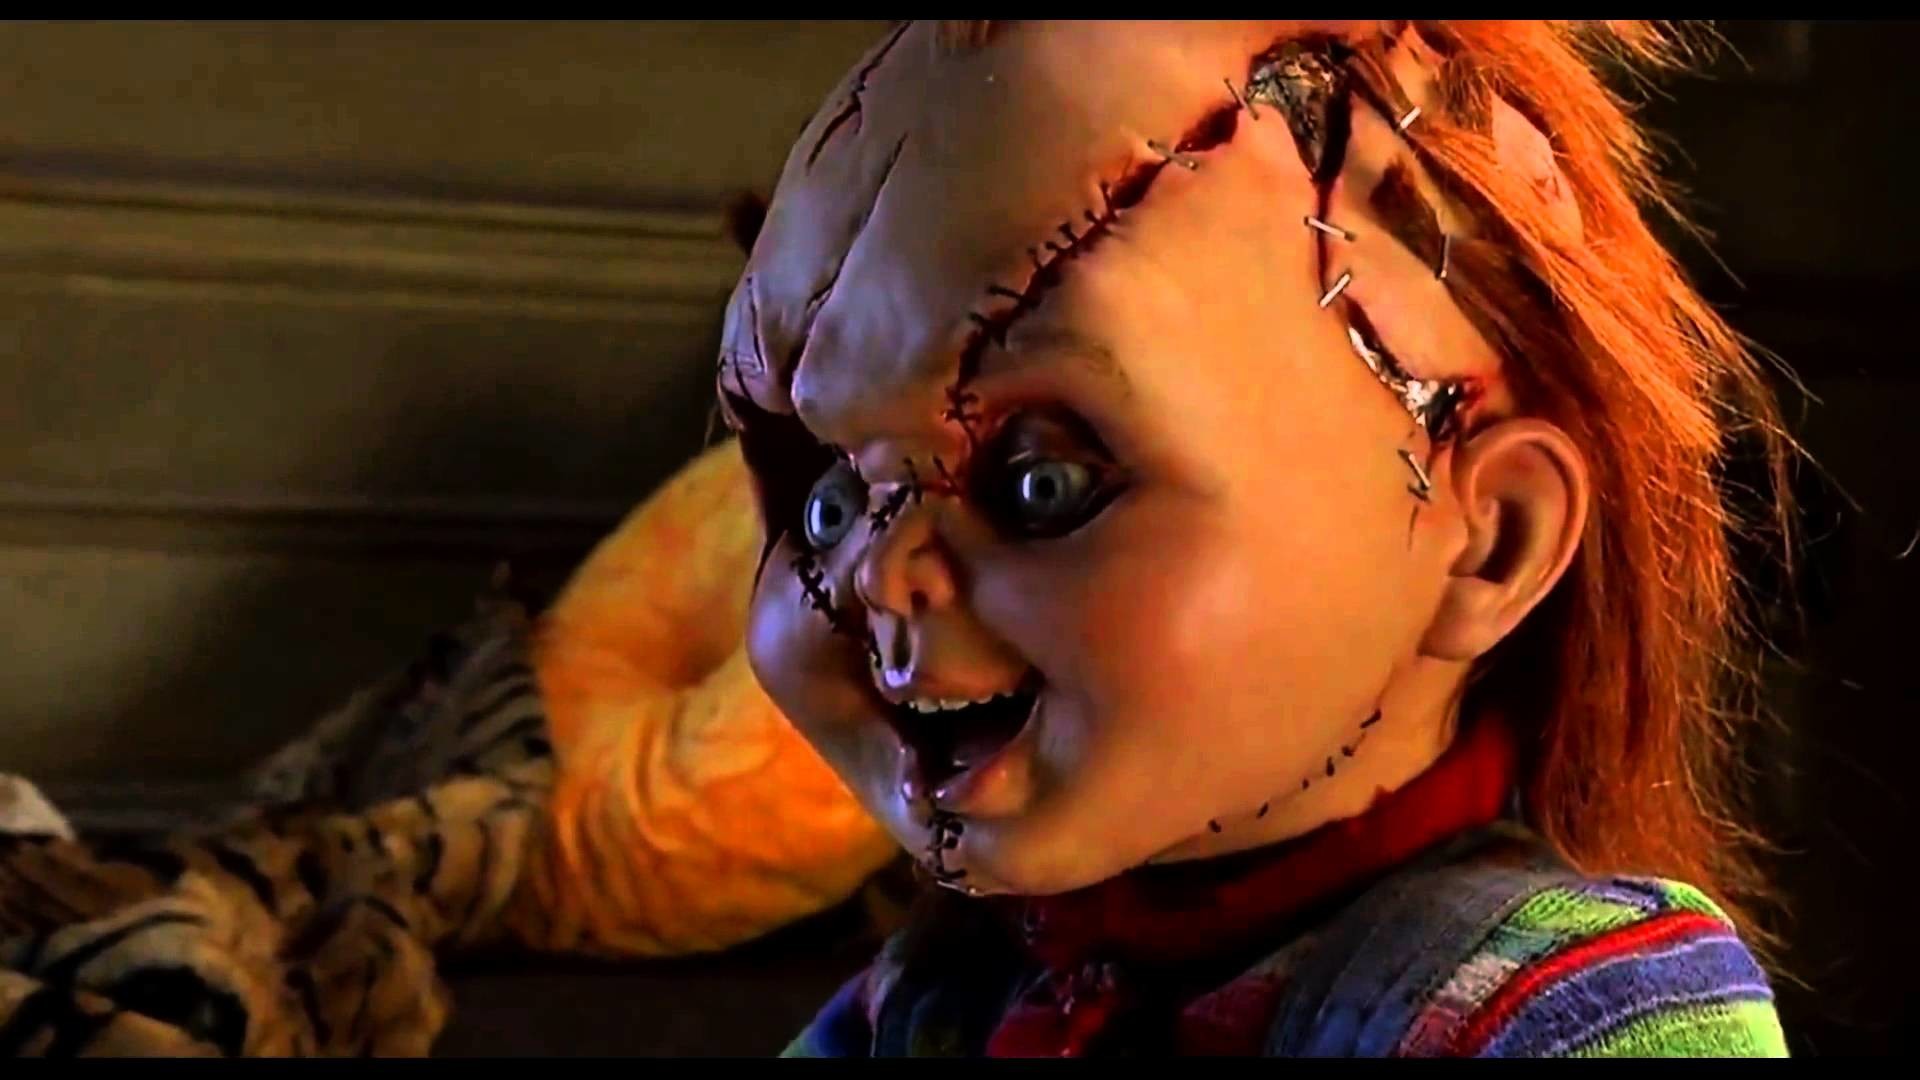 1920x1080 I love you - Bride of Chucky [1080p HD]